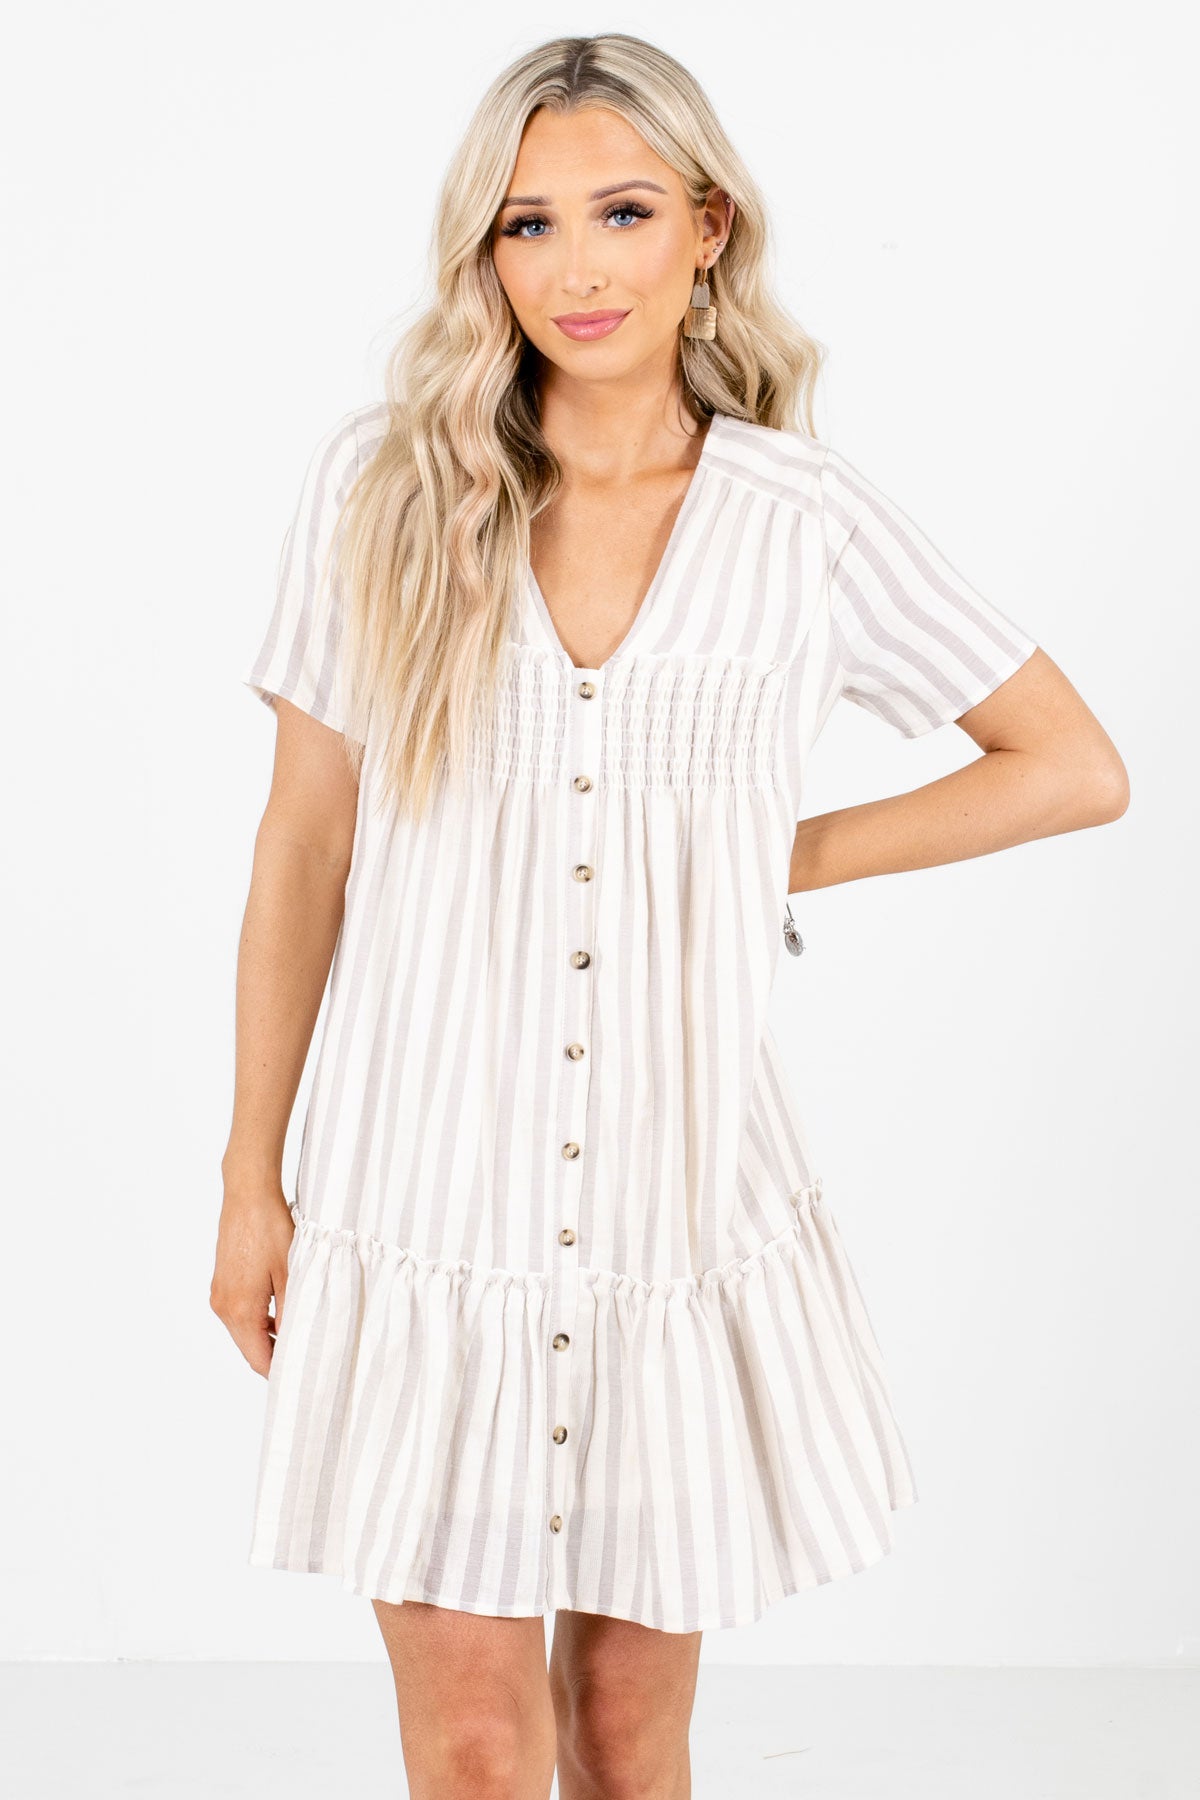 Cream Stripe Patterned Boutique Mini Dresses for Women